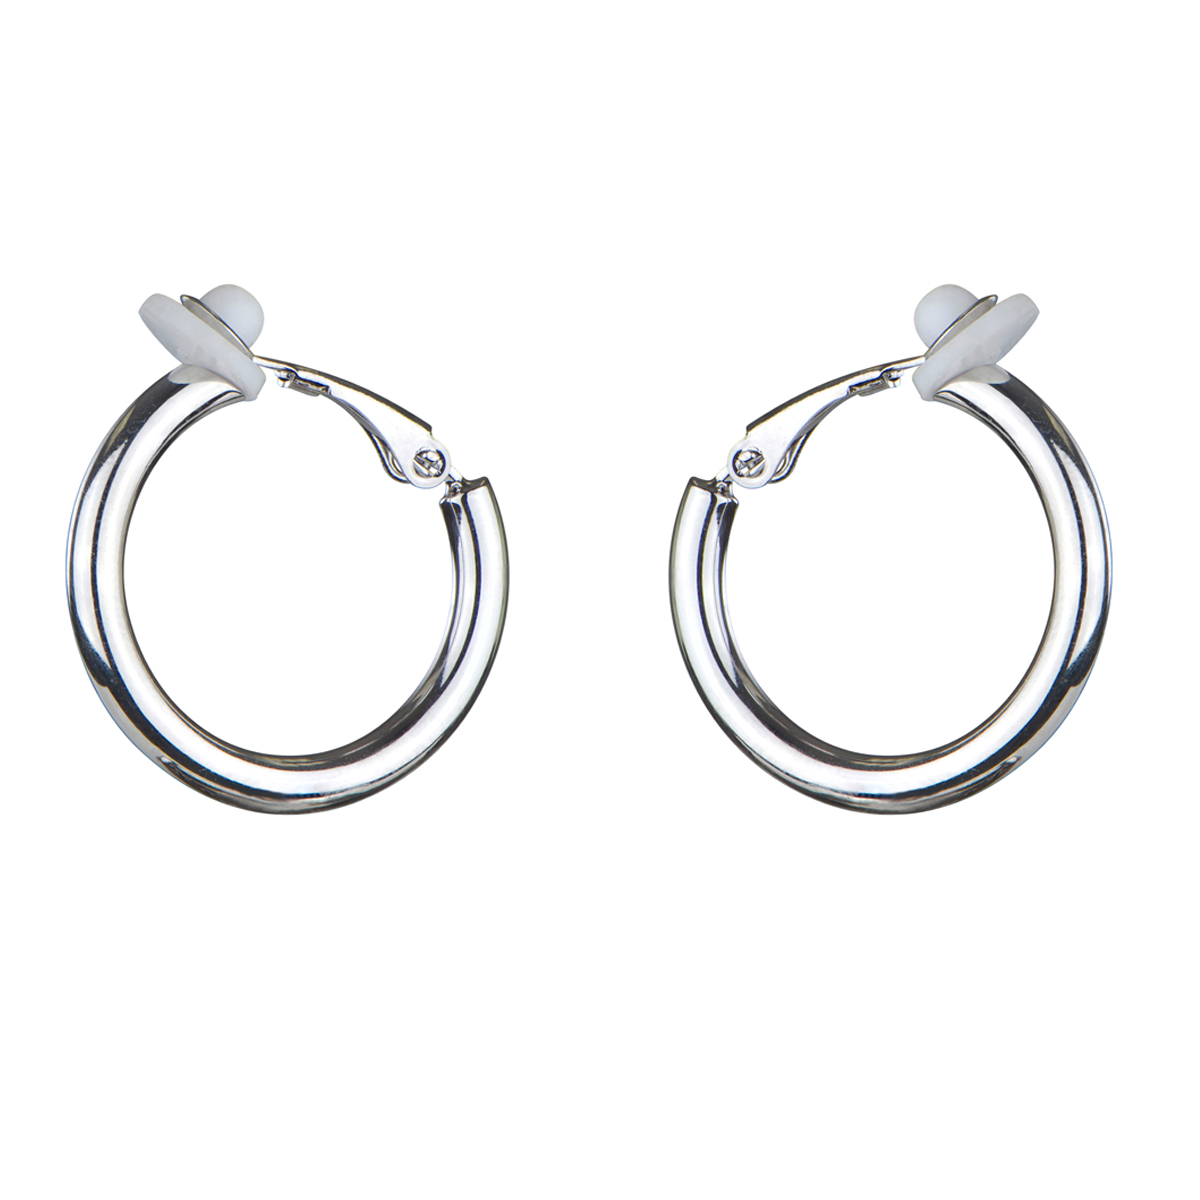 clip earrings charlineu0027s clip-on silvertone hoop earrings - 18mm yeicdwu